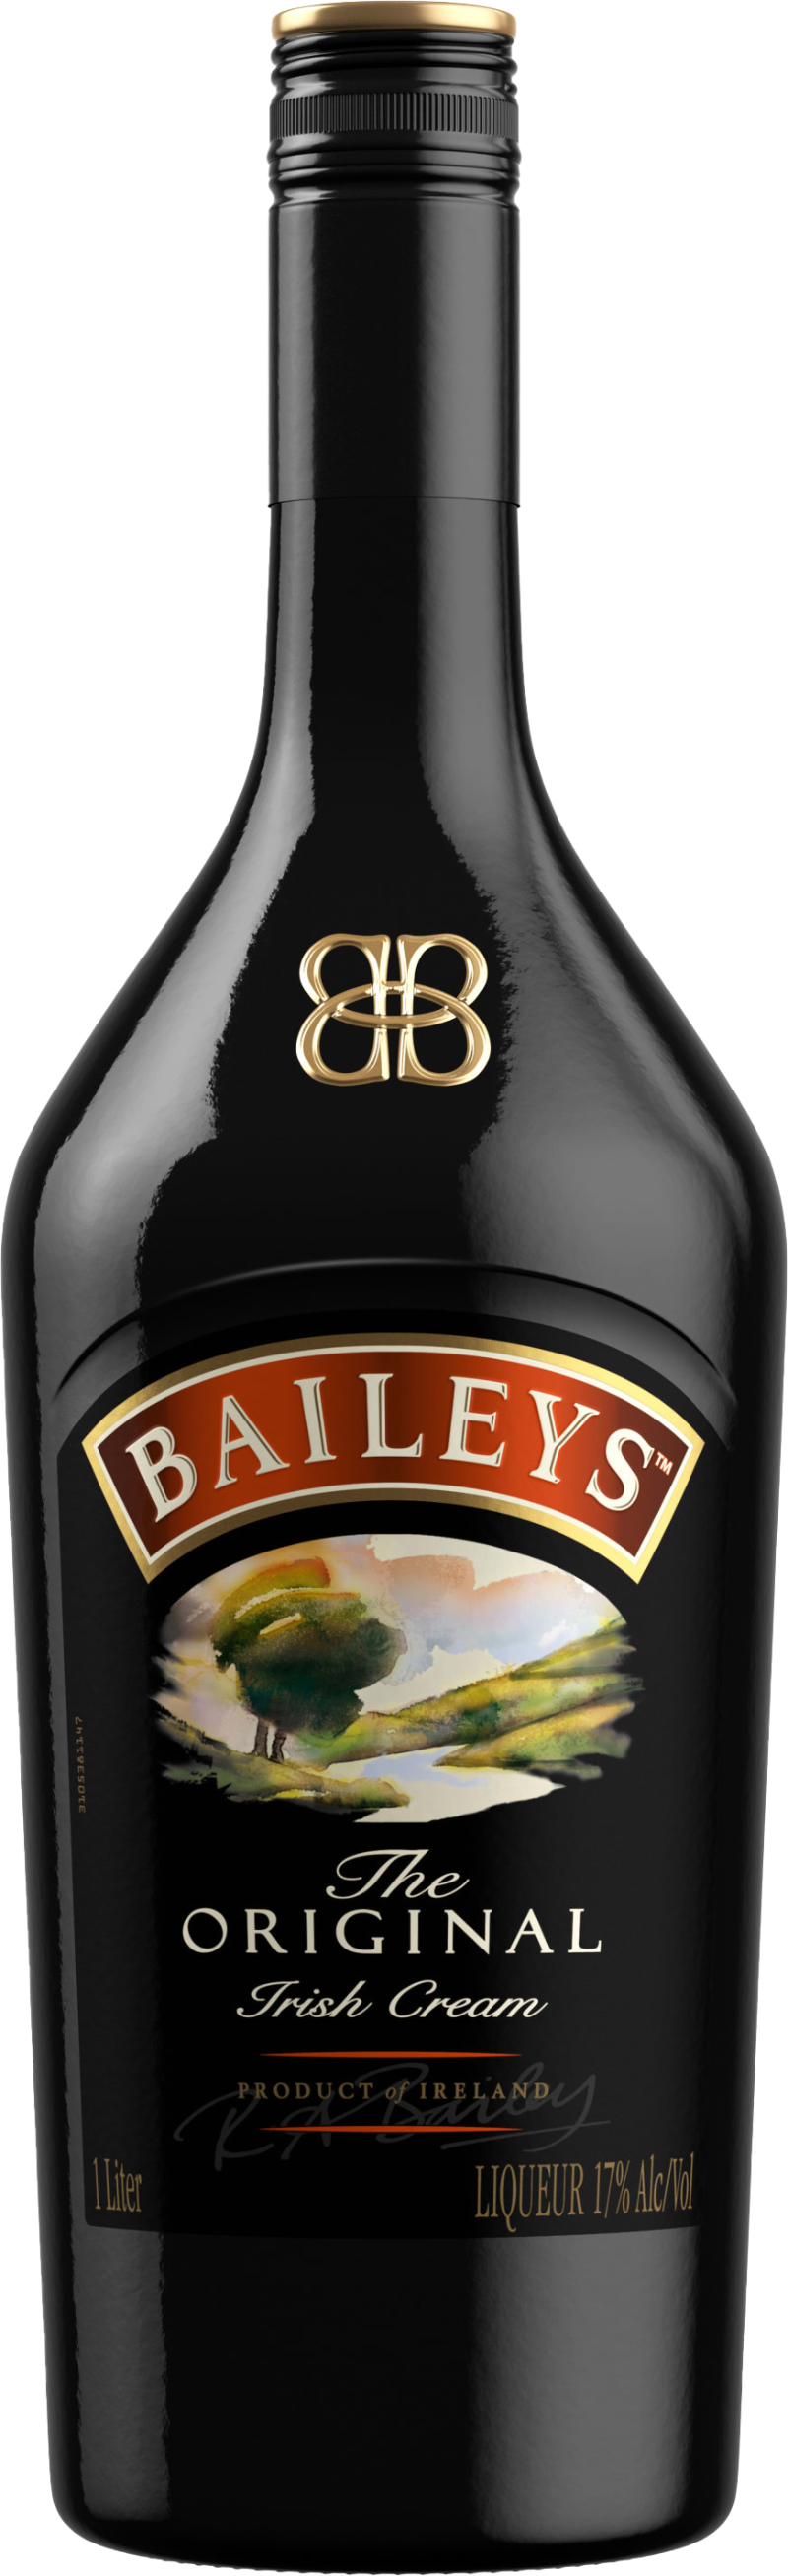 17% Irish - cl Cream 100 Baileys Original vol